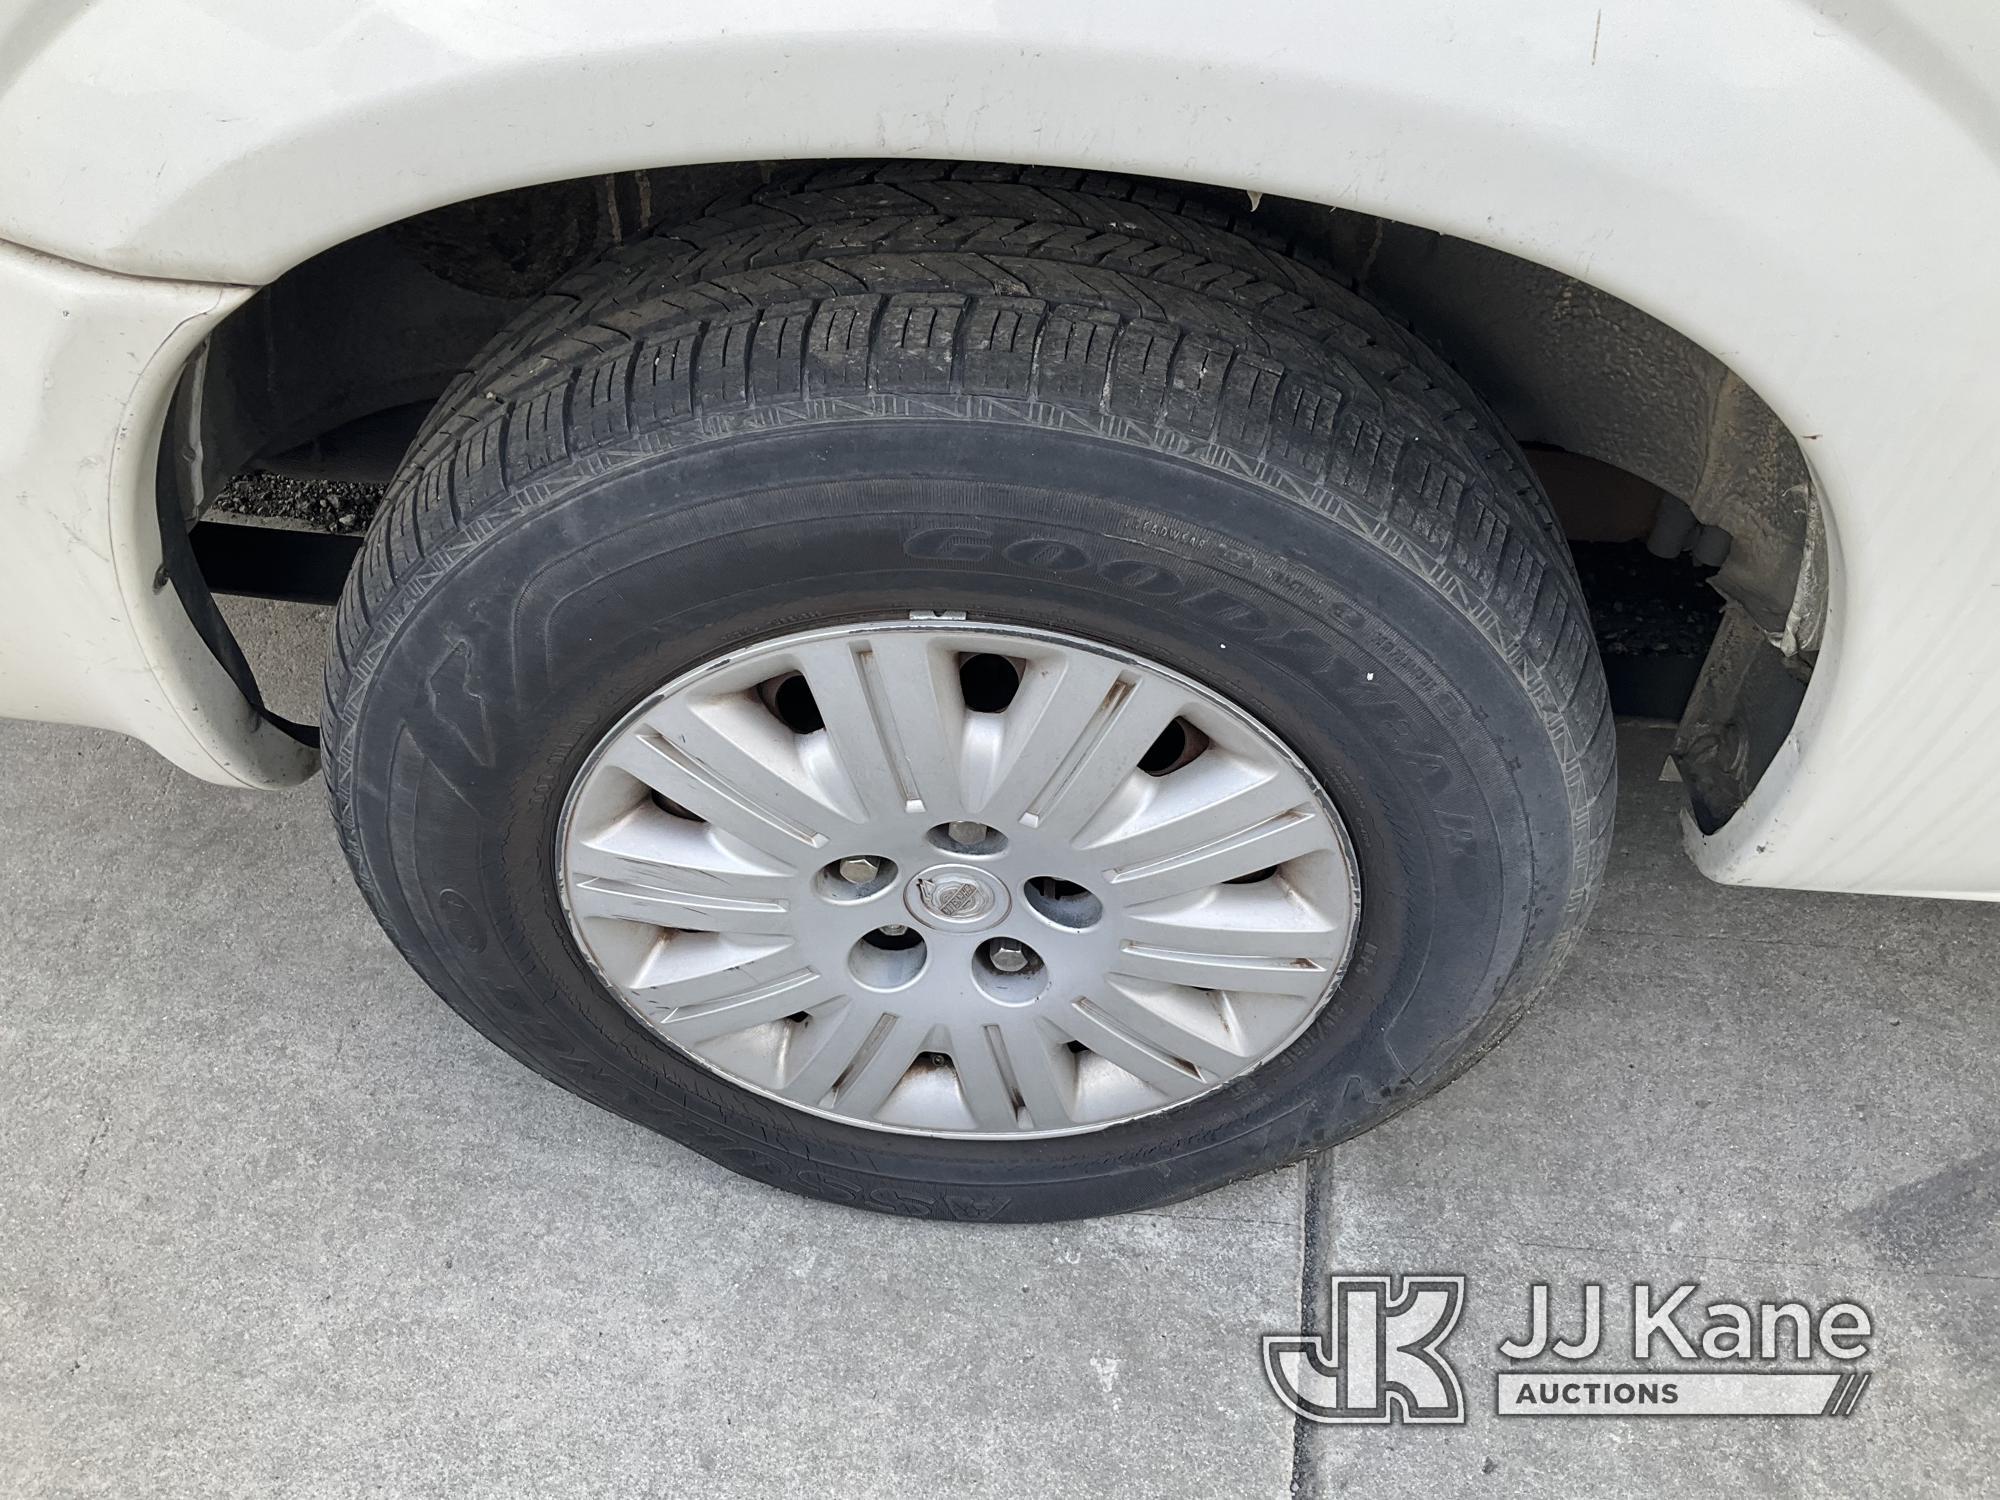 (Jurupa Valley, CA) 2006 Chrysler Town & Country Mini Passenger Van Not Running, Cracked Tires